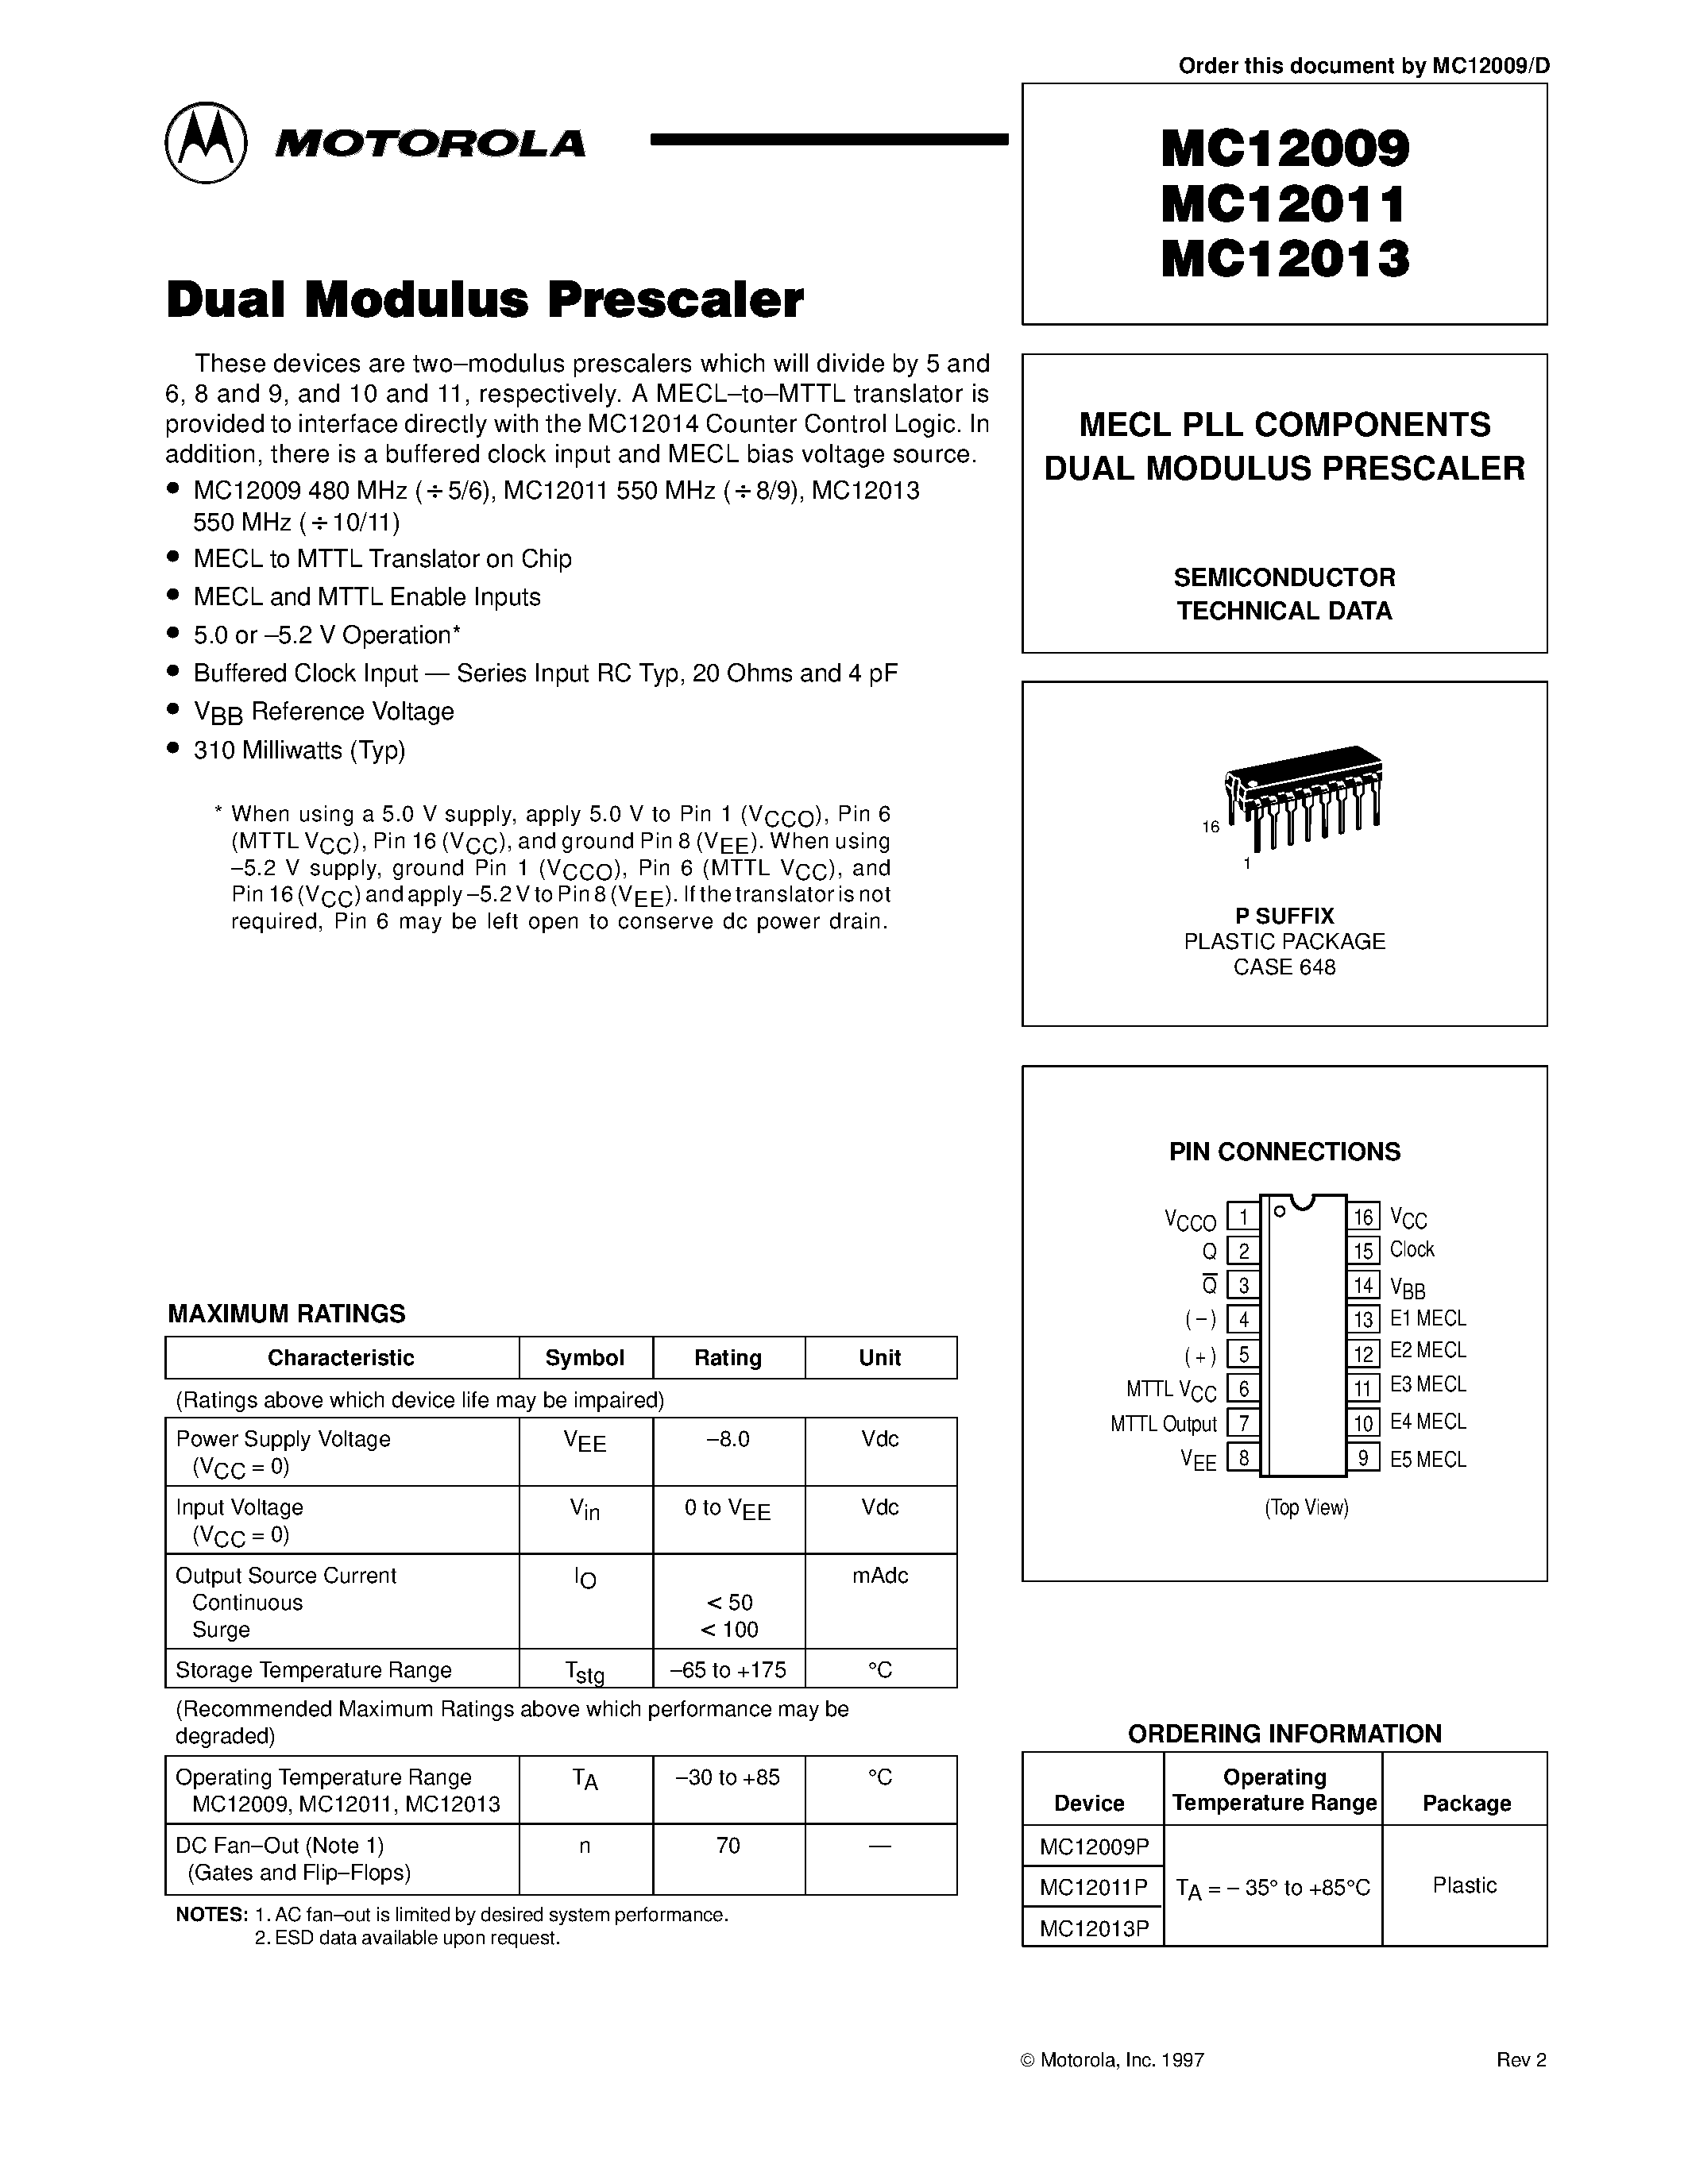 Datasheet MC12013 - MECL PLL COMPONENTS DUAL MODULUS PRESCALER page 1